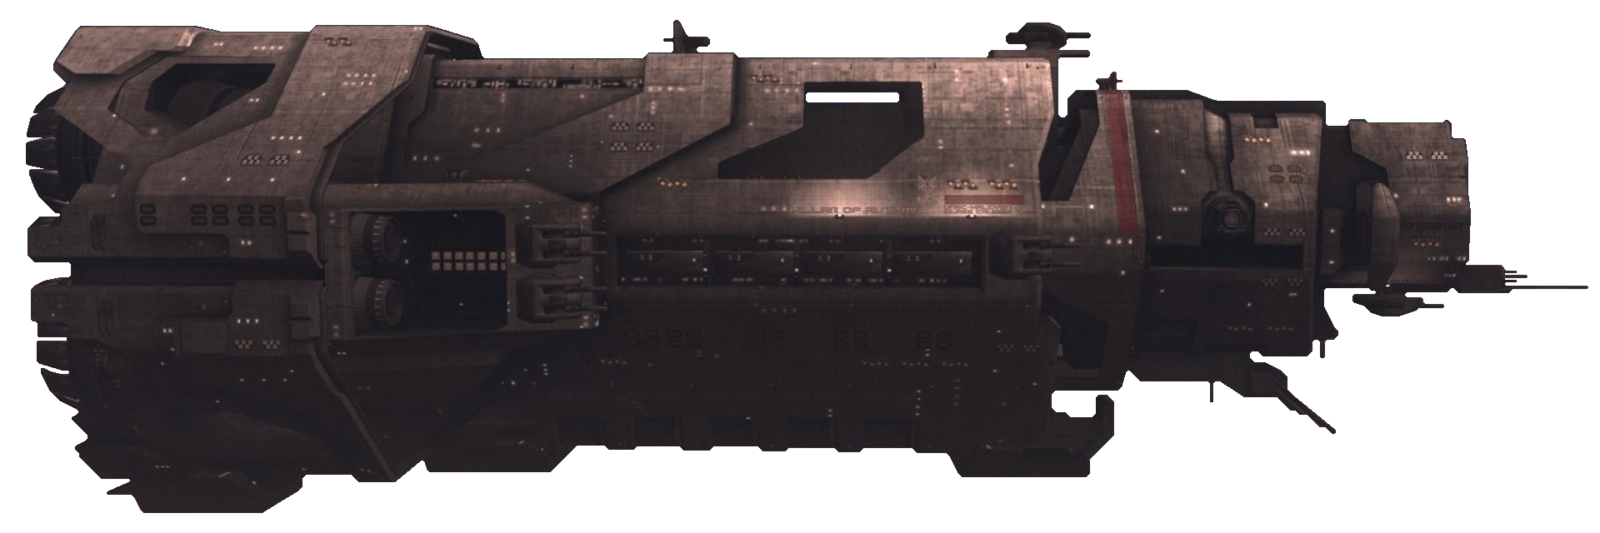 【HALO舰船百科】翠鸟级轻型巡洋舰 —— 因为太怕痛就全点防御力了-第9张